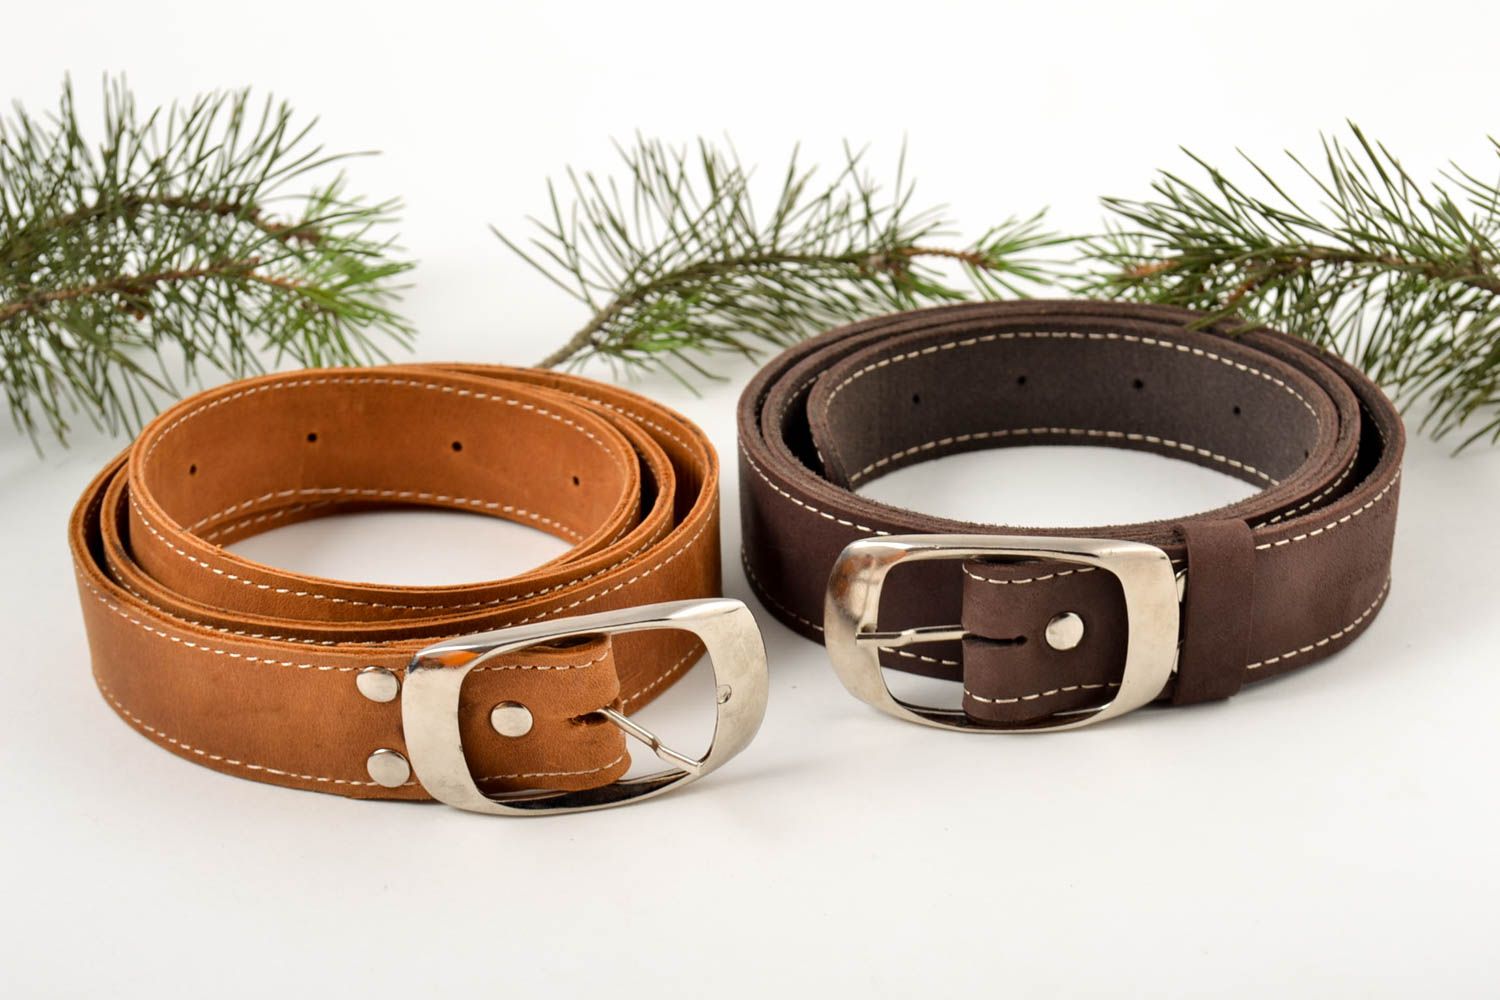 Handmade leather belts 2 designer belts for men leather goods gift for boyfriend photo 1